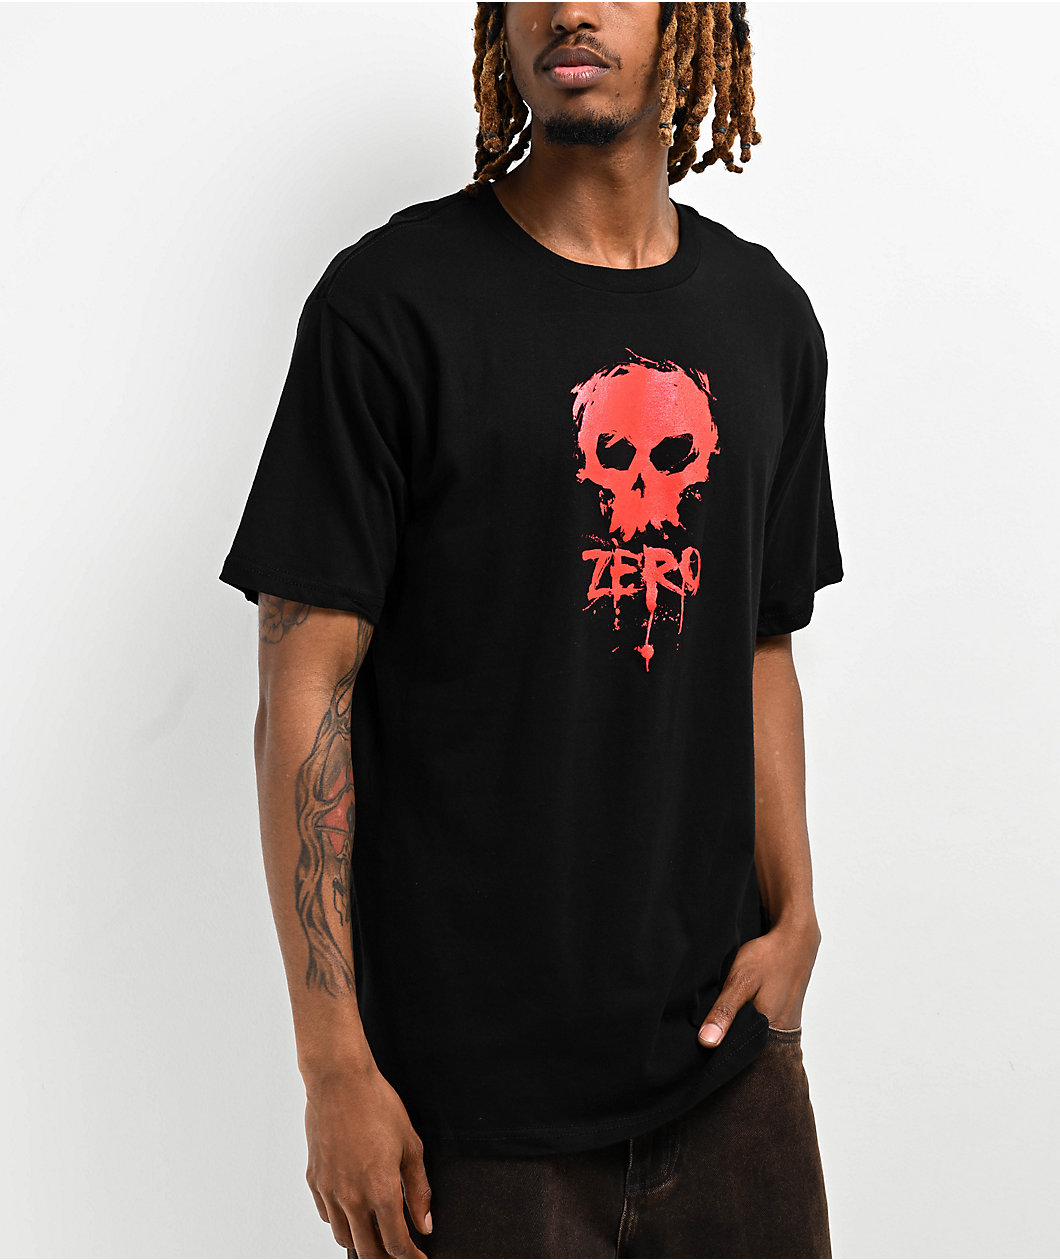 Zero Blood Skull Black T-Shirt